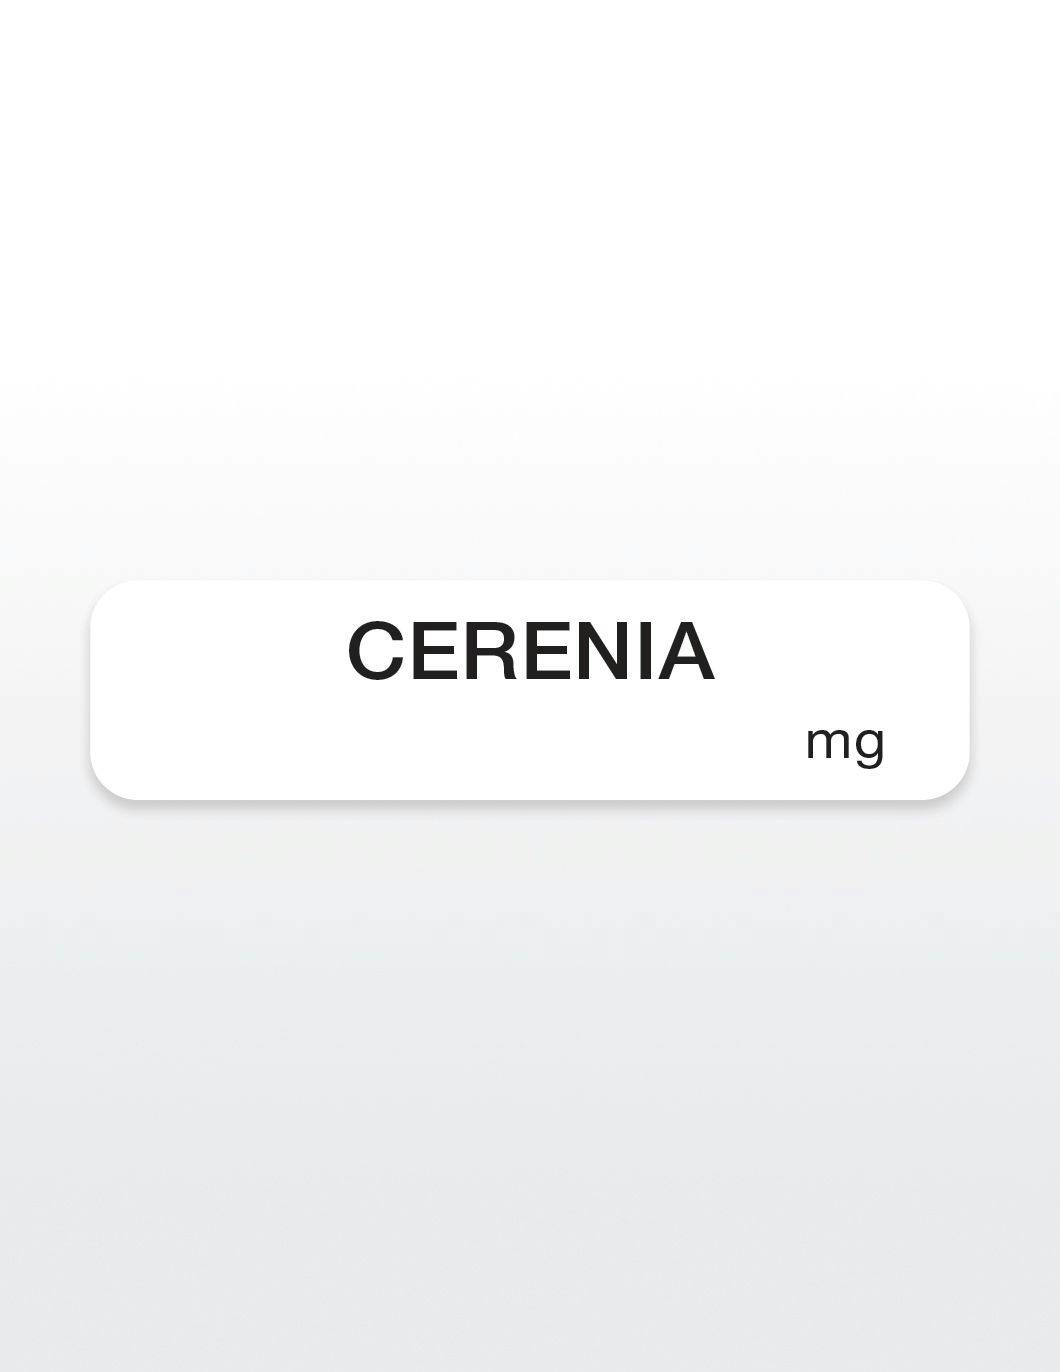 cerenia-drug-syringe-stickers